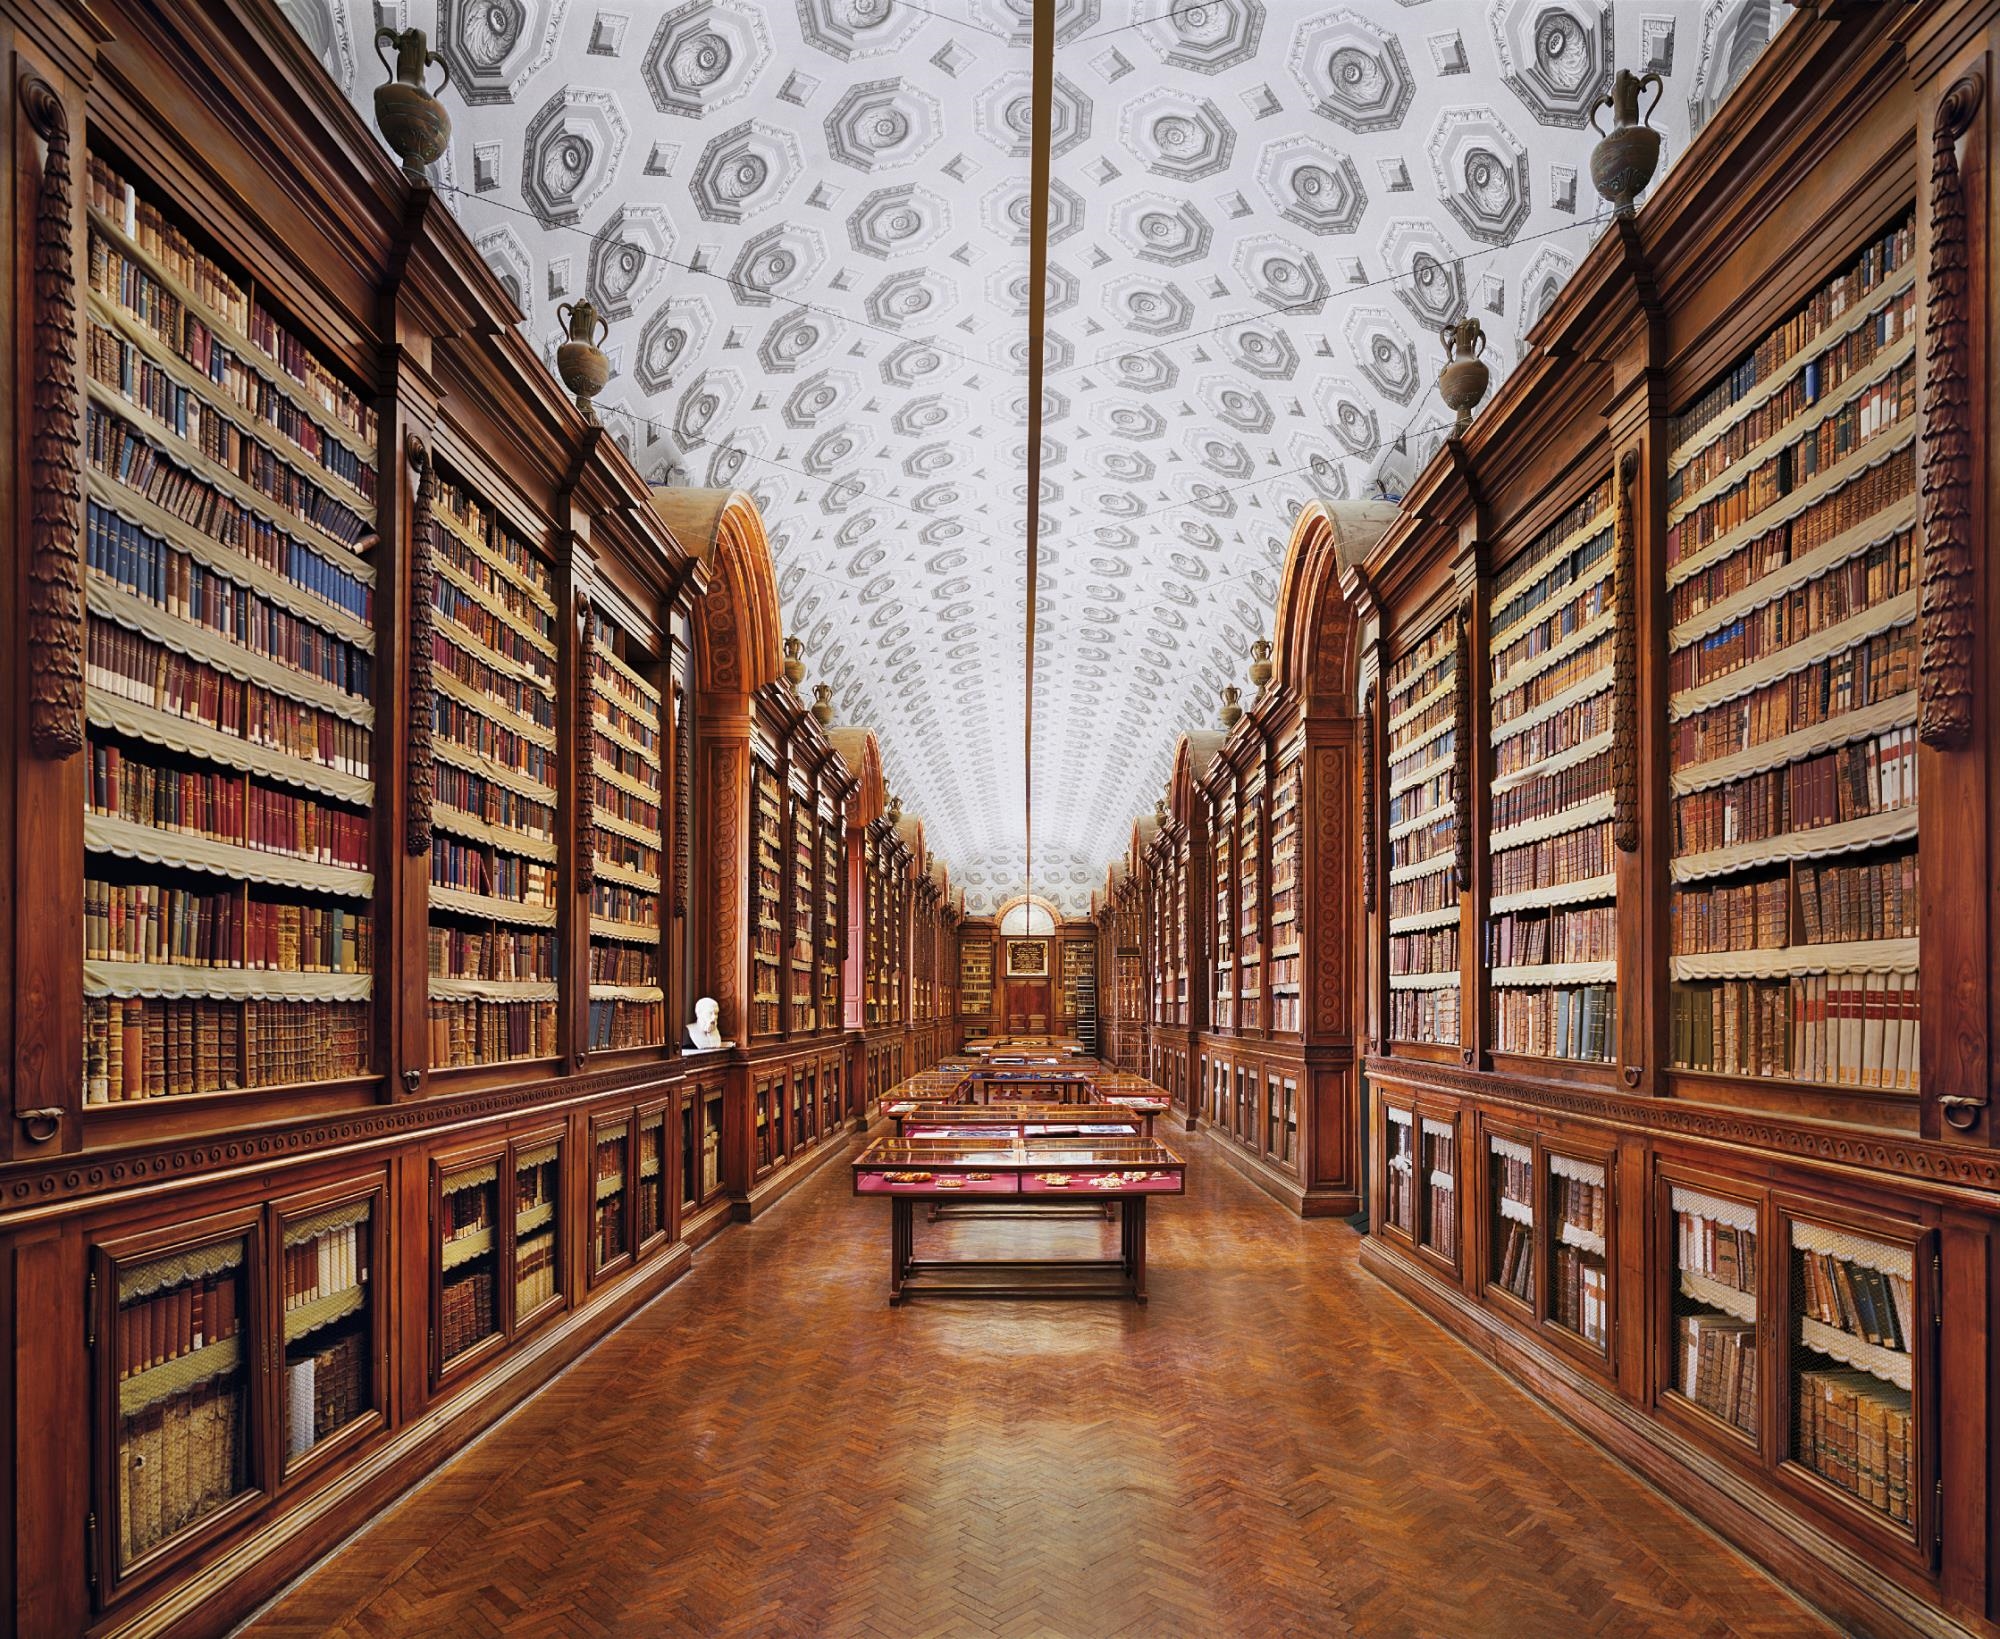 Bodoniana Library, Parma by Ahmet Ertug, 2015